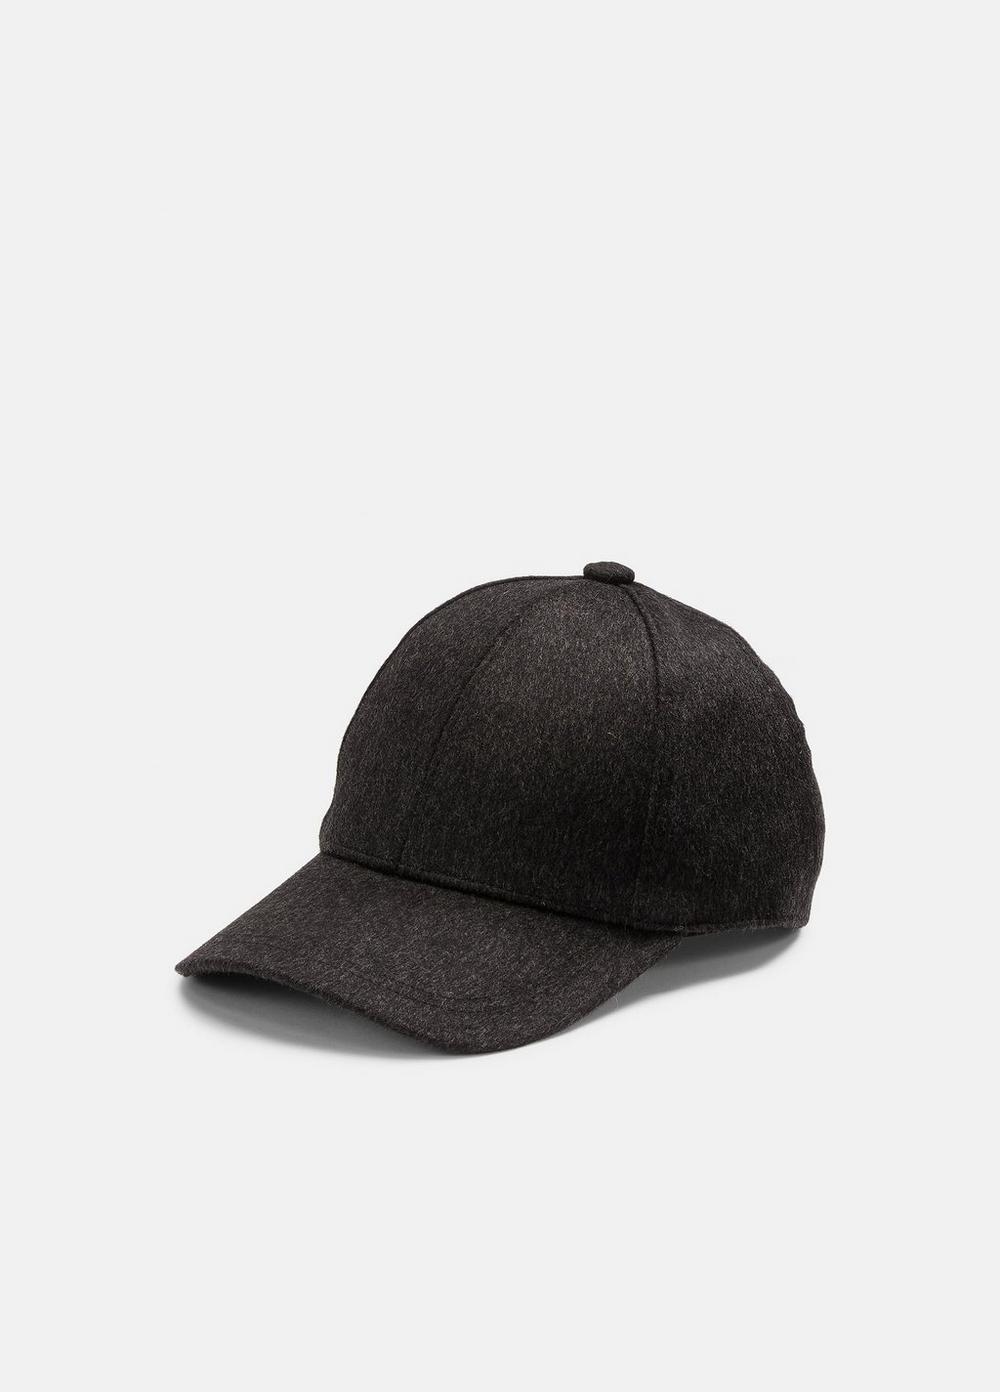 cashmere baseball cap, heather charcoal, size s/m vince